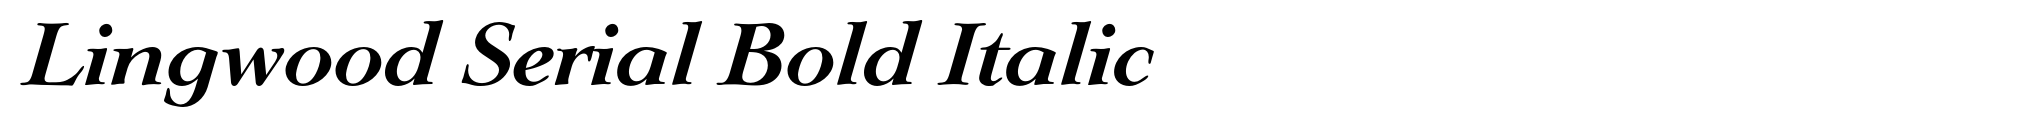 Lingwood Serial Bold Italic image